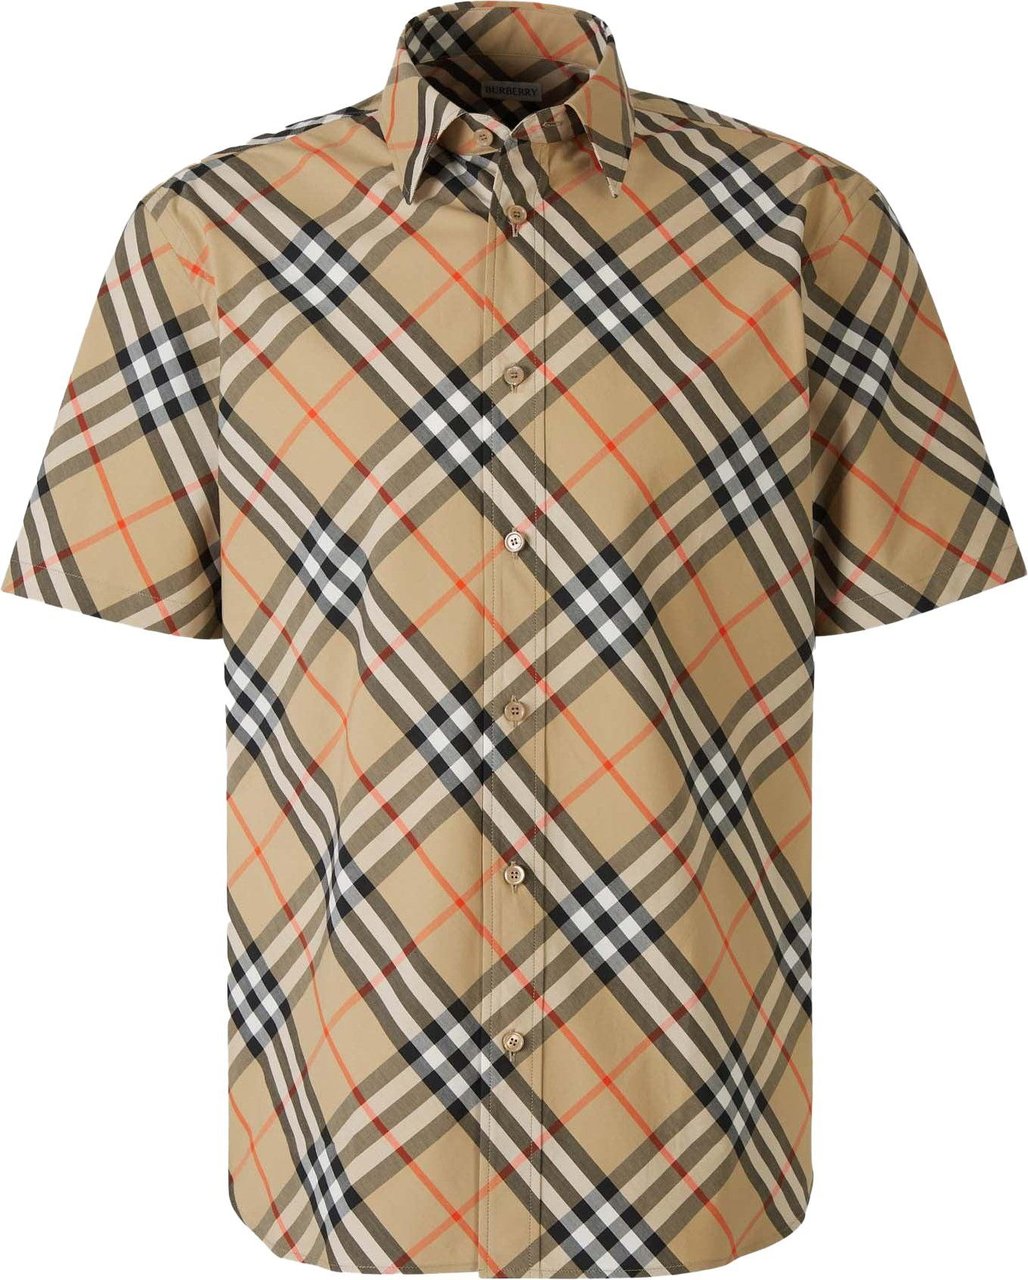 Burberry Checkered Shirt Beige